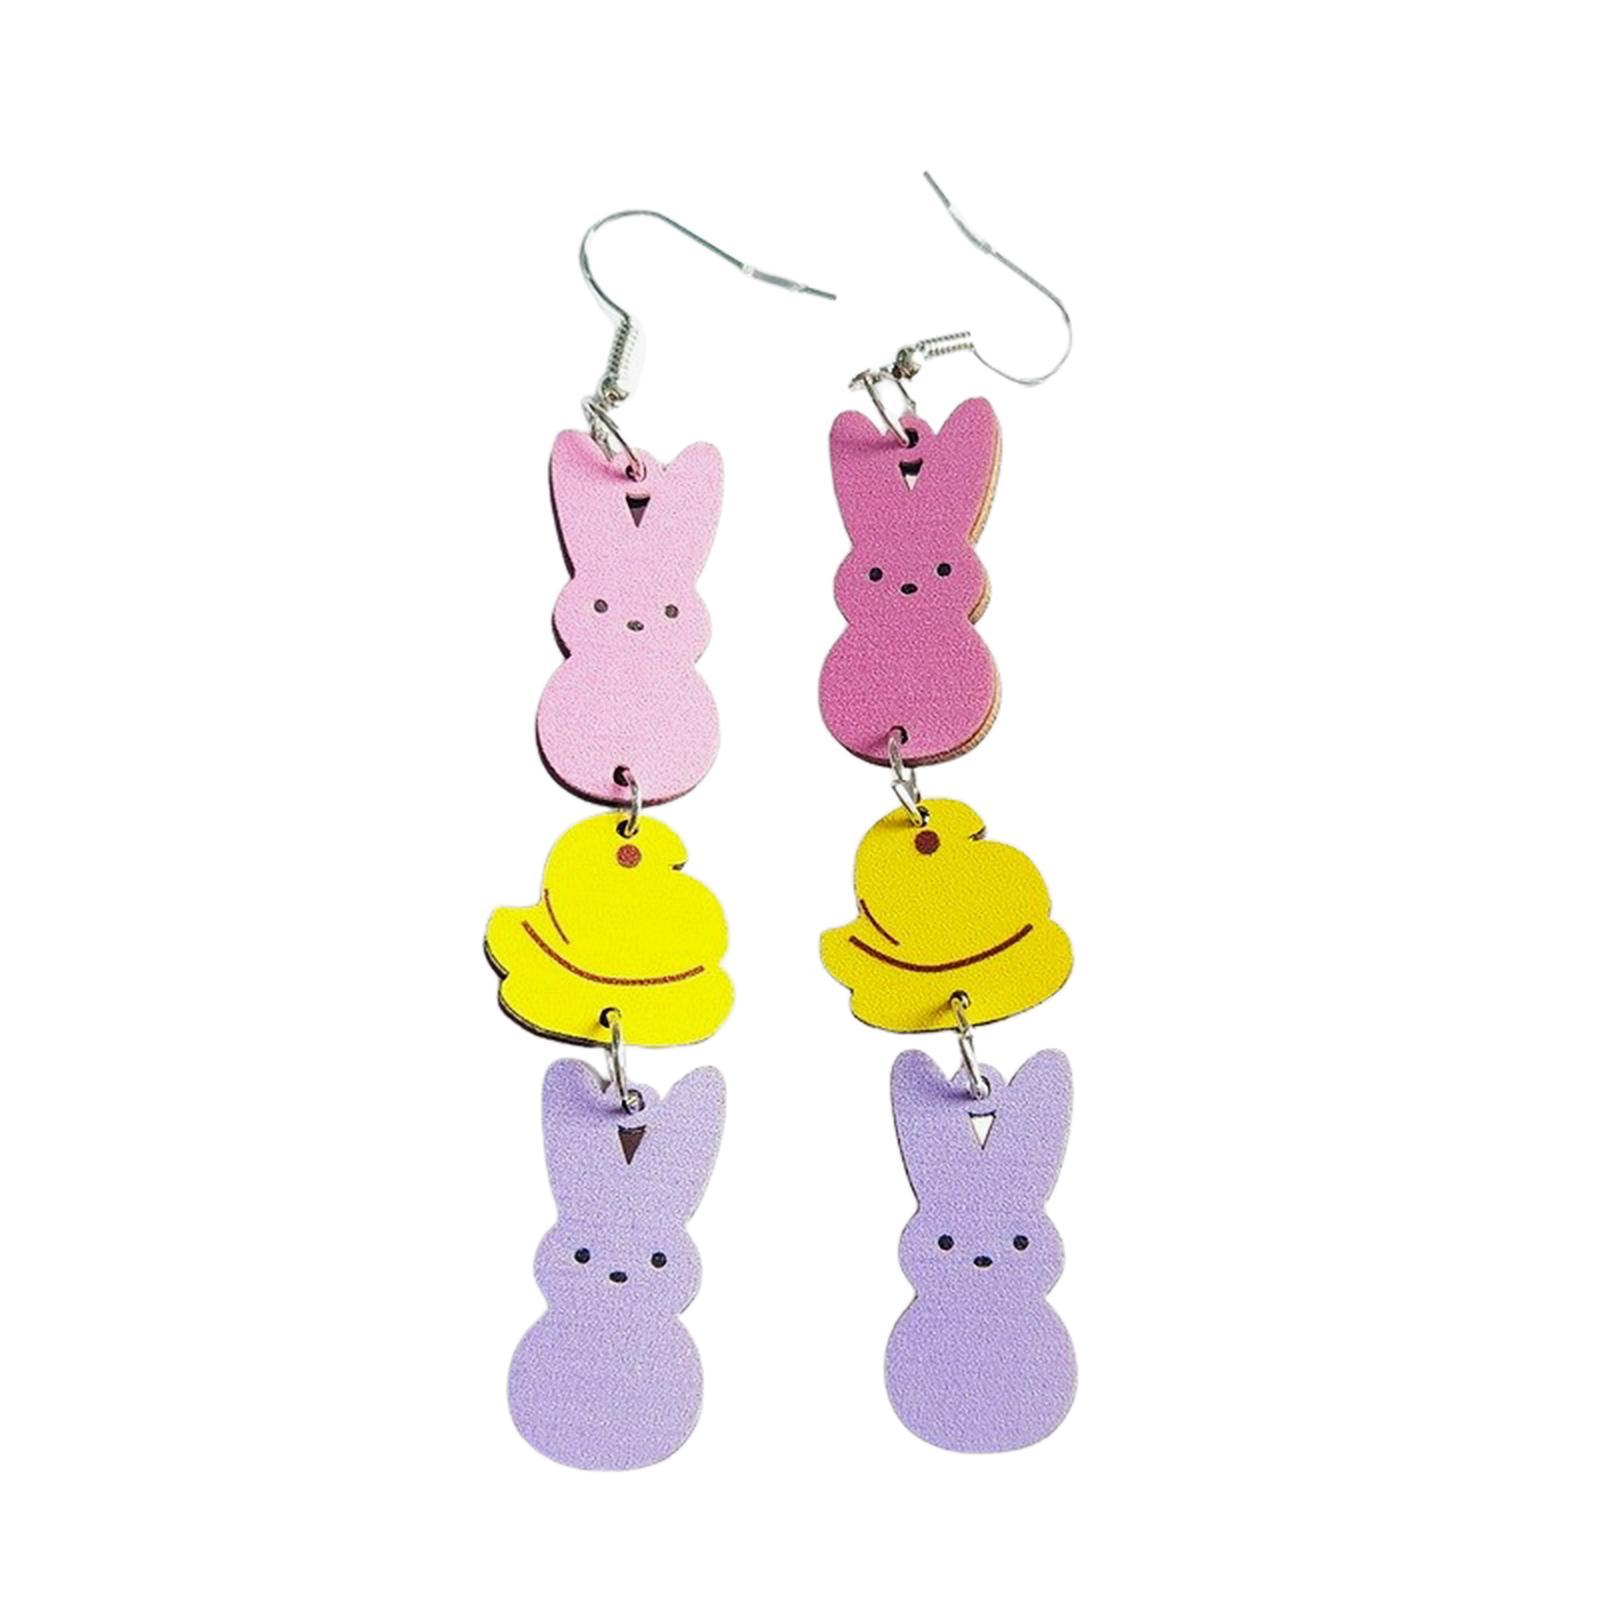 Cute Easter Earrings Trendy Lightweight Jewelry for Holiday Women Teens